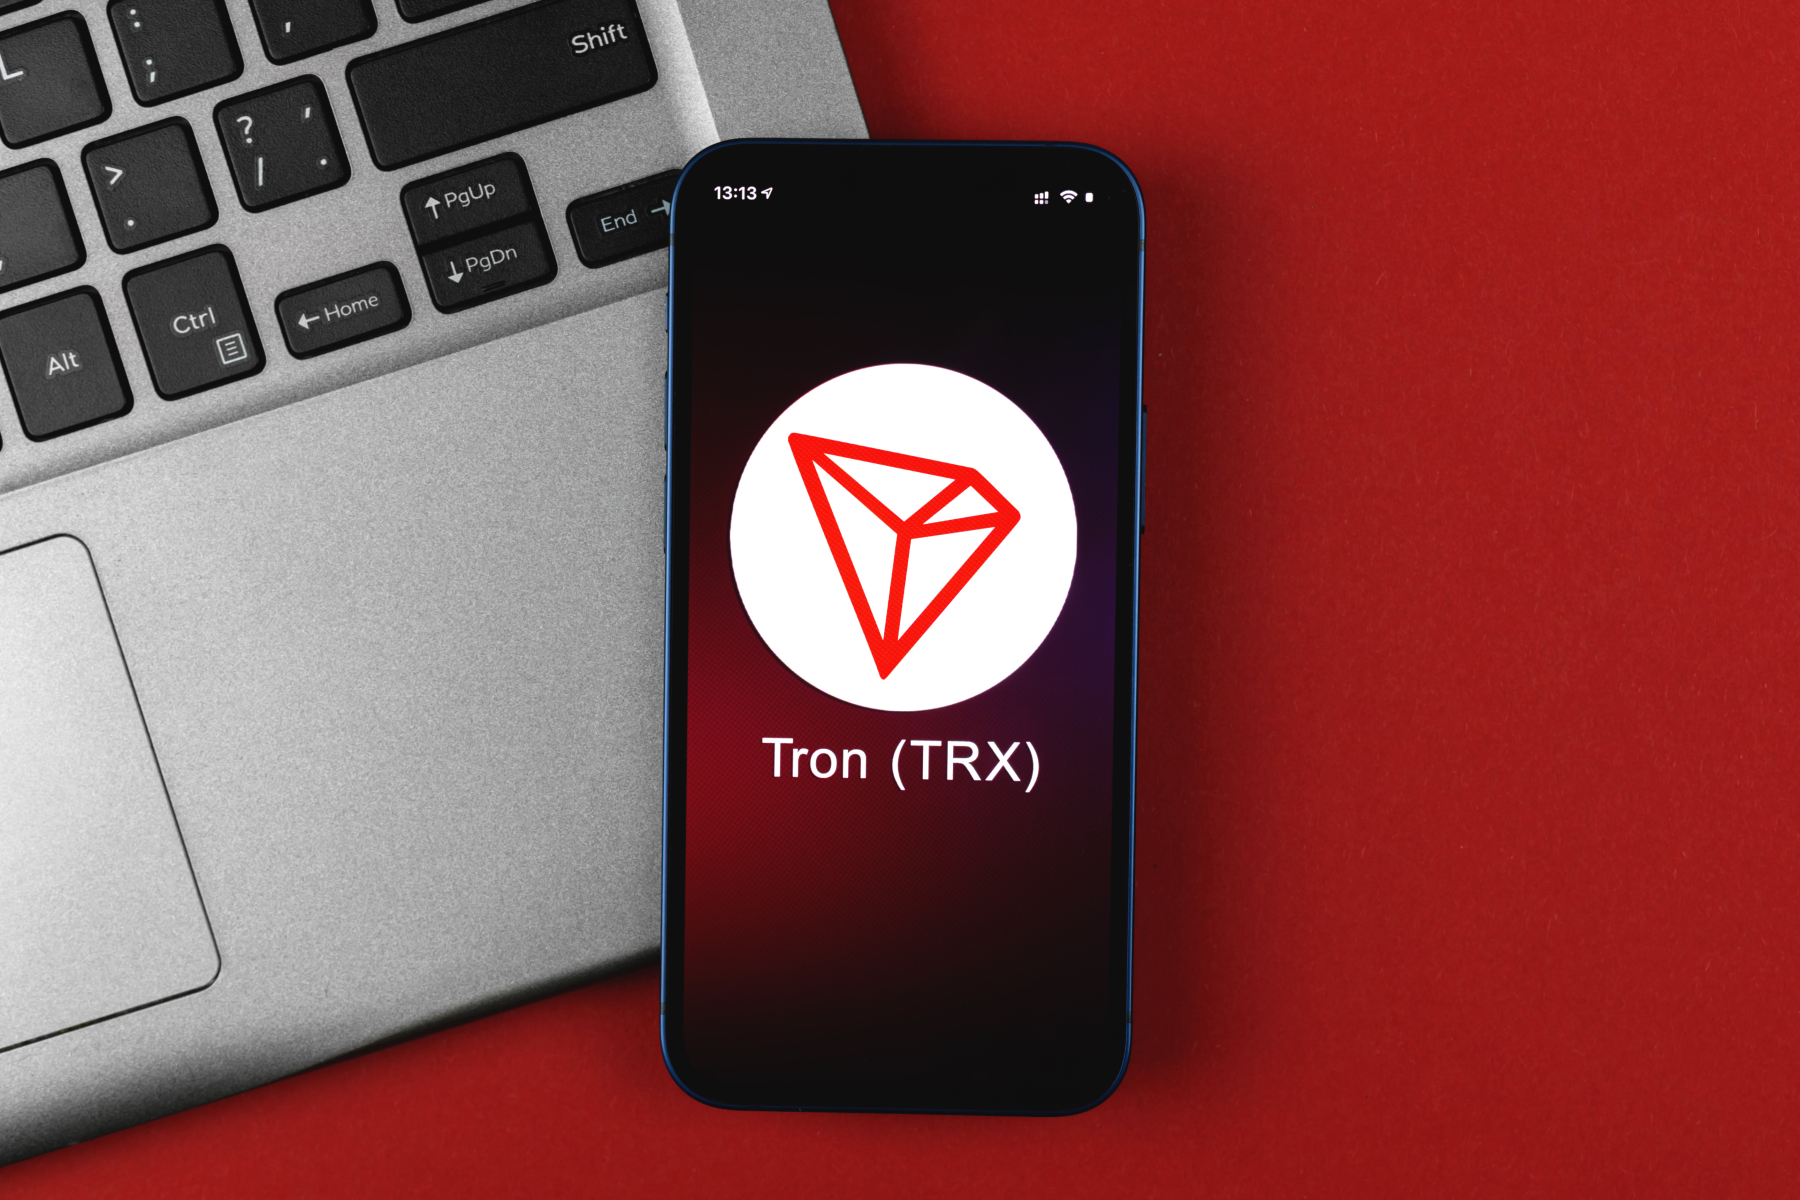 Binance US will remove Tron (TRX) next week
